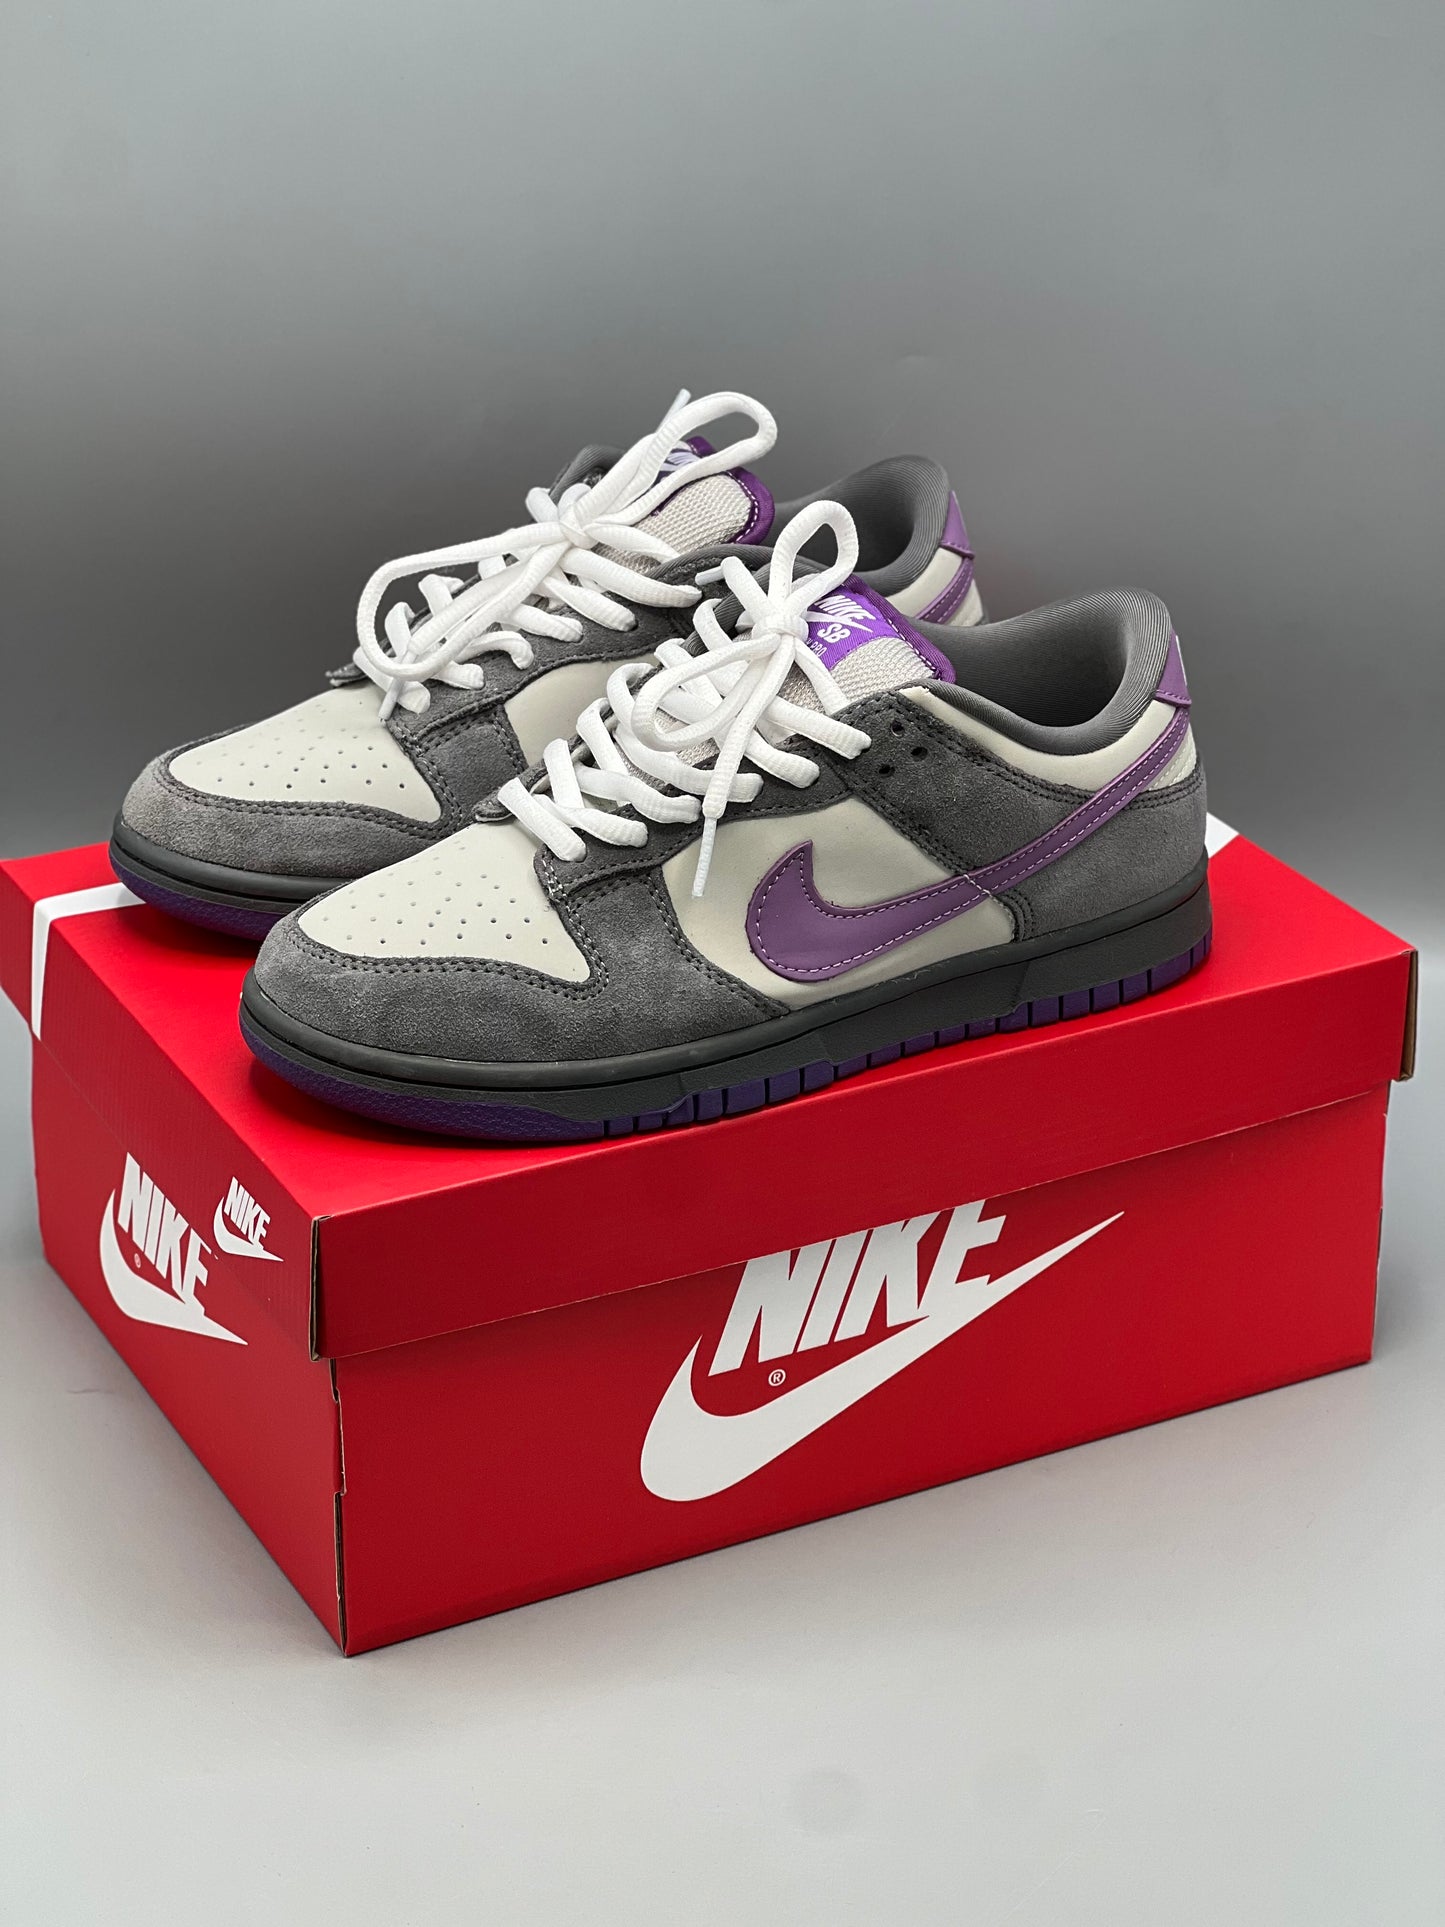 Nike sb dunk low pro “Purple pigeon”